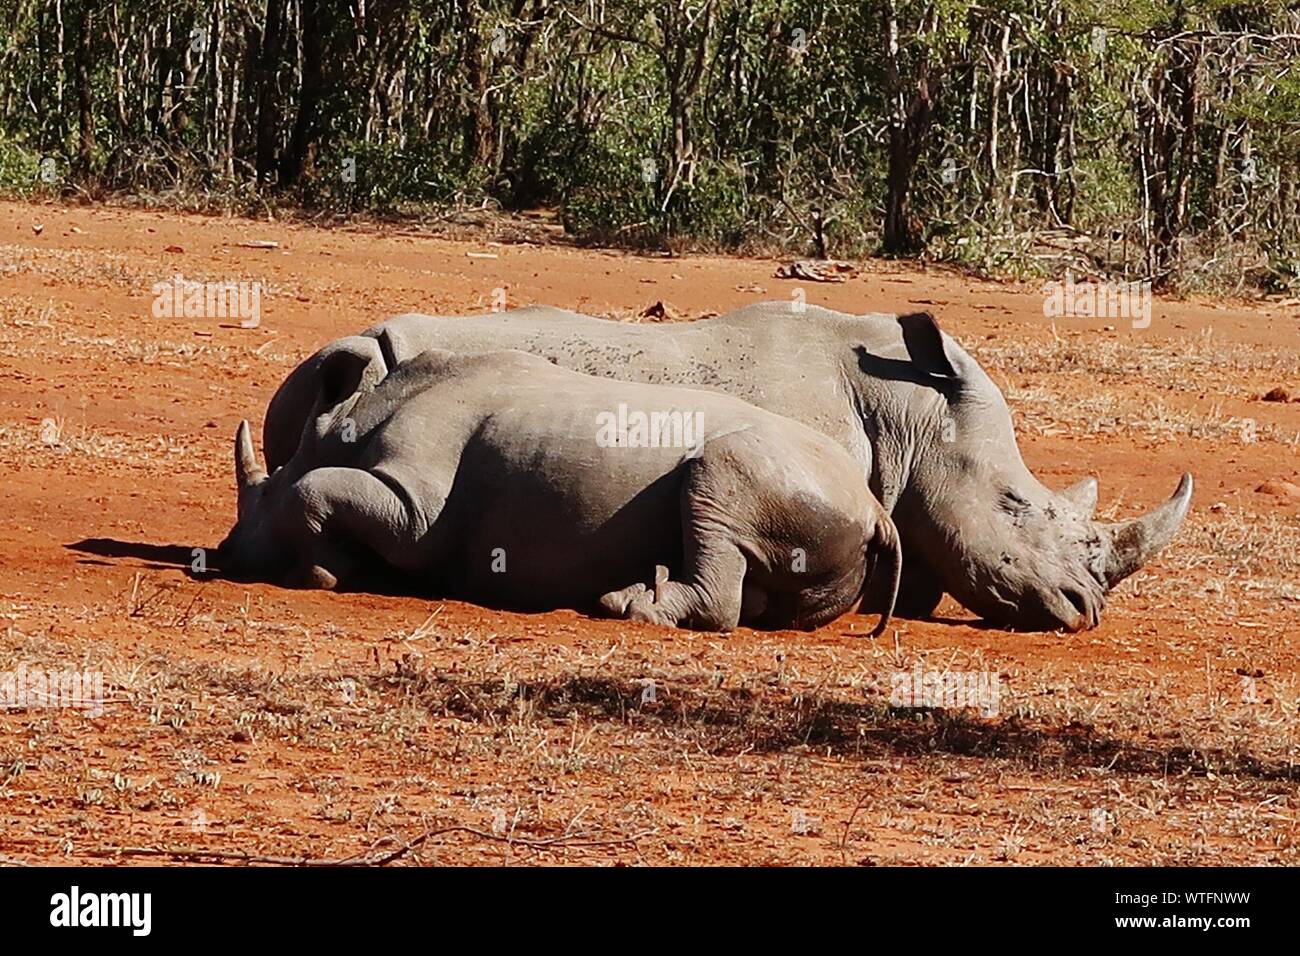 Rhinoceroses Sleeping On Field Stock Photo